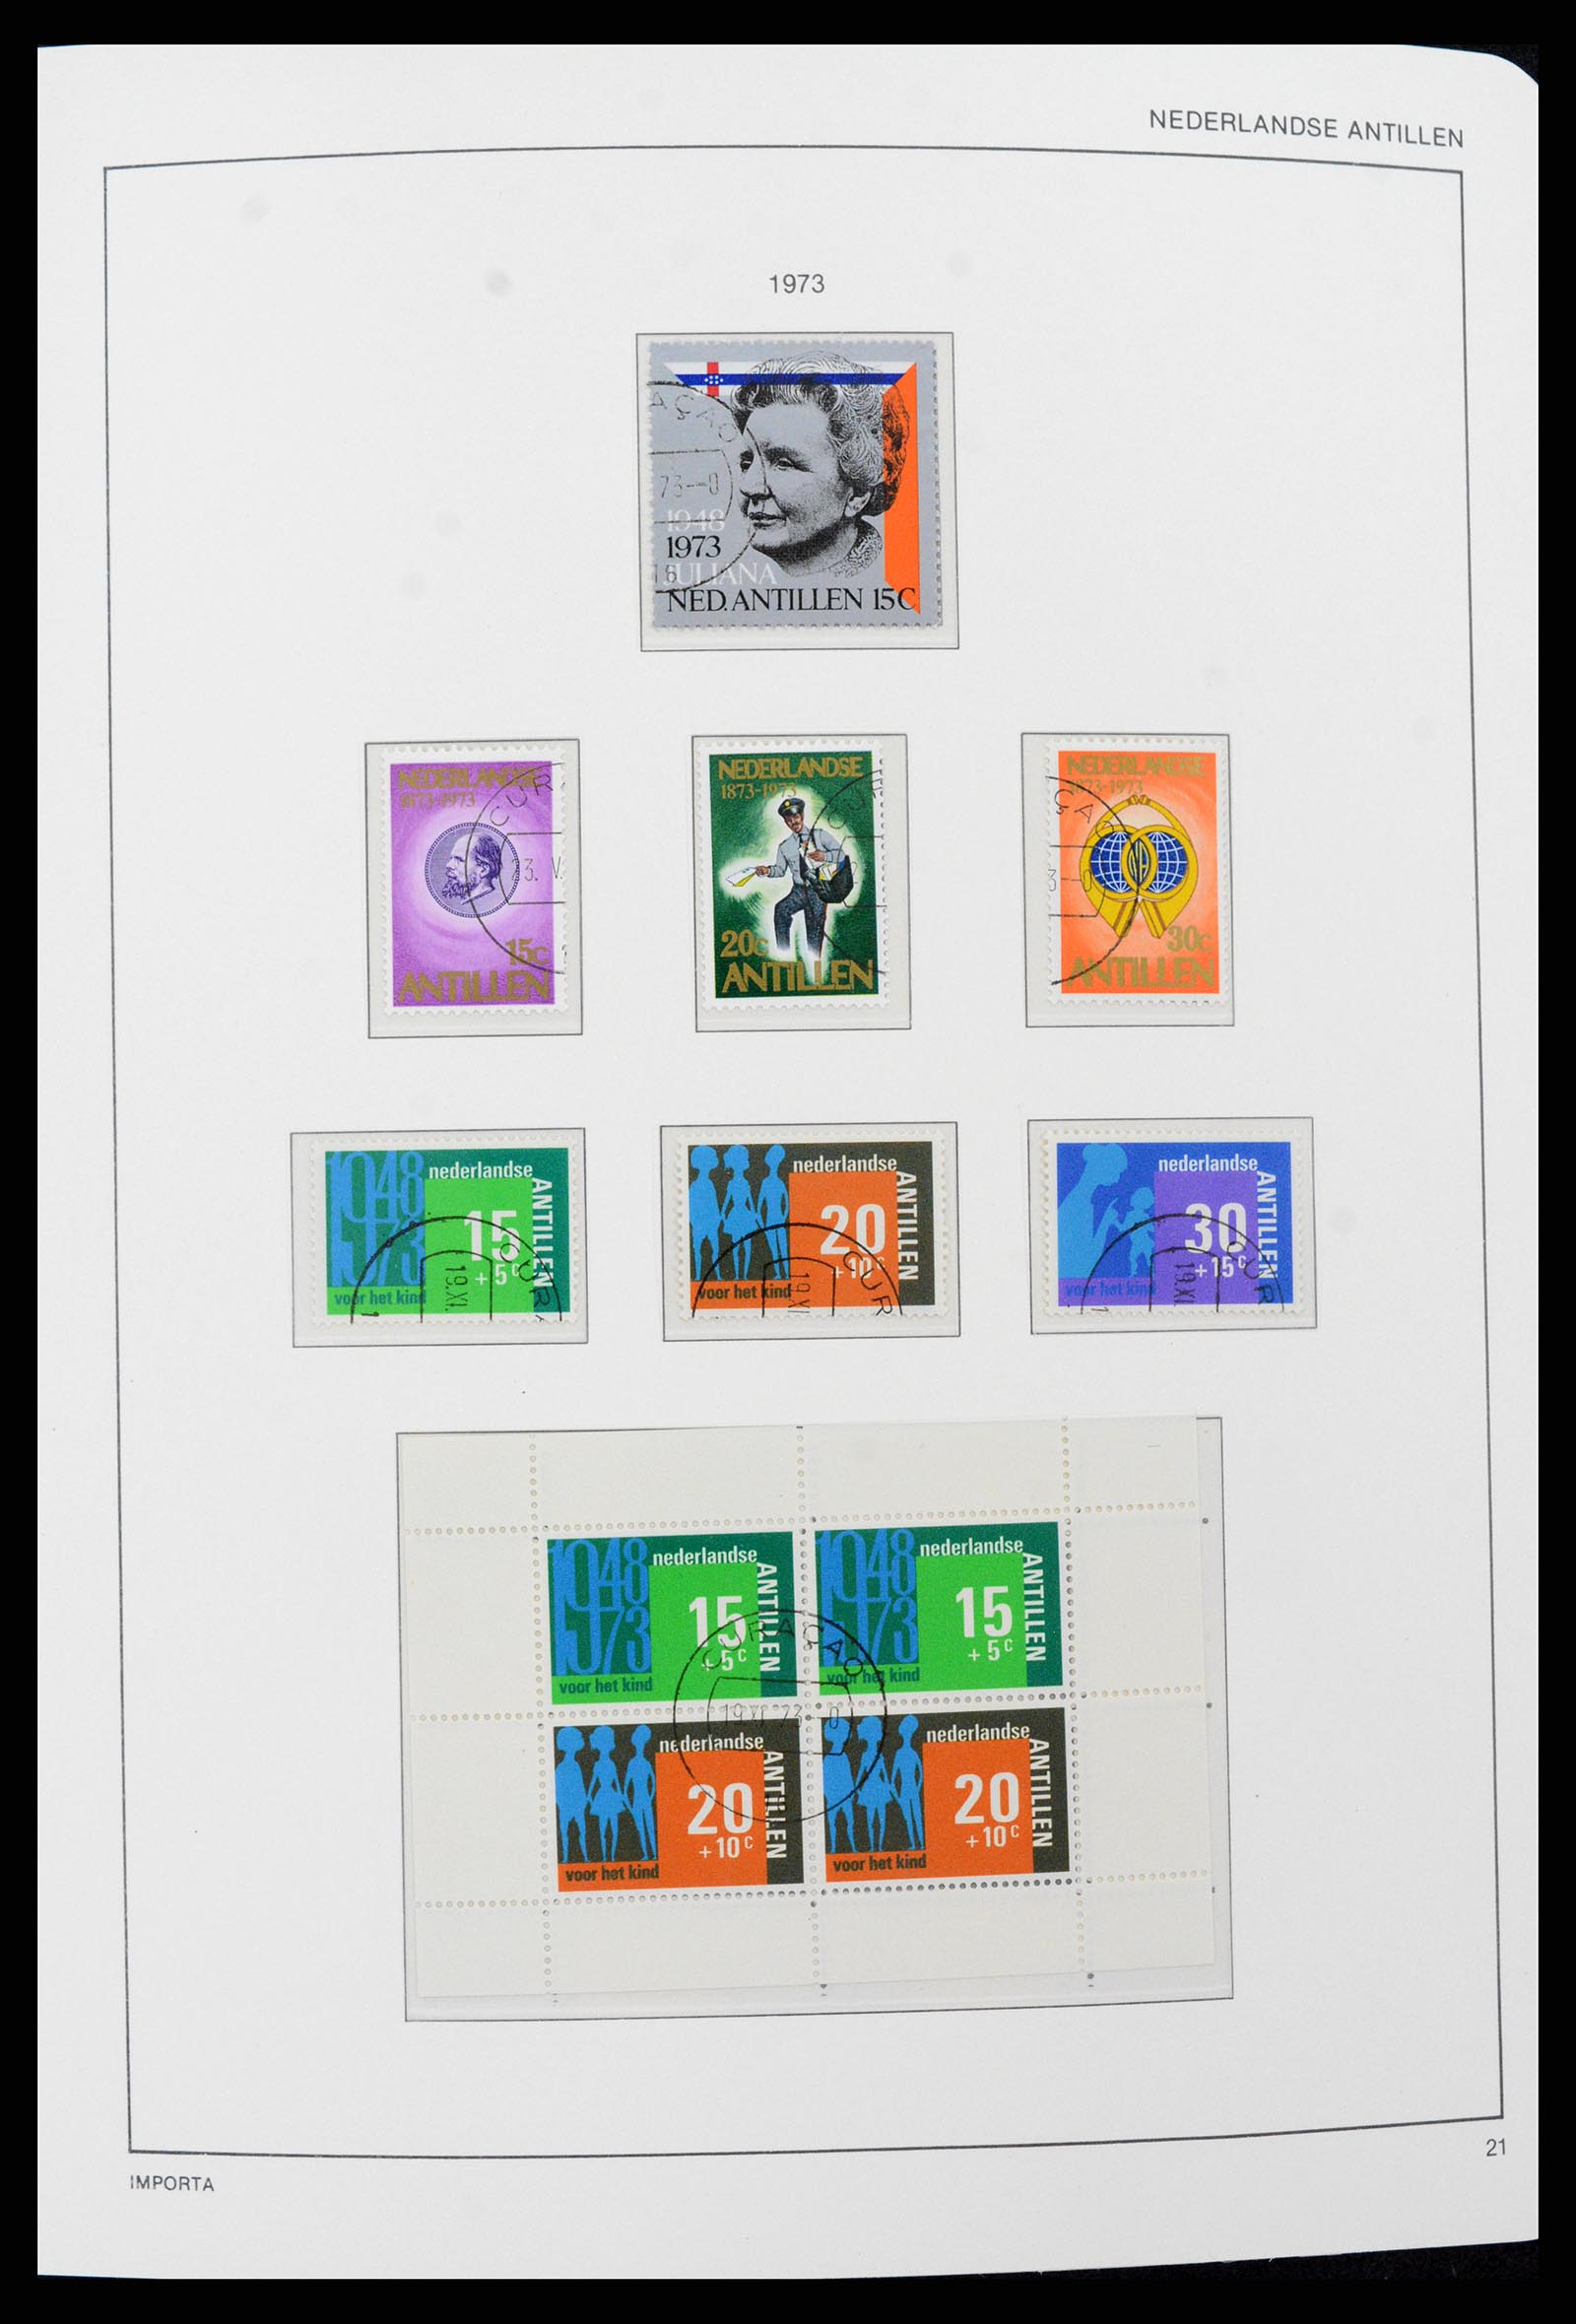 37693 021 - Stamp collection 37693 Netherlands Antilles 1949-2001.